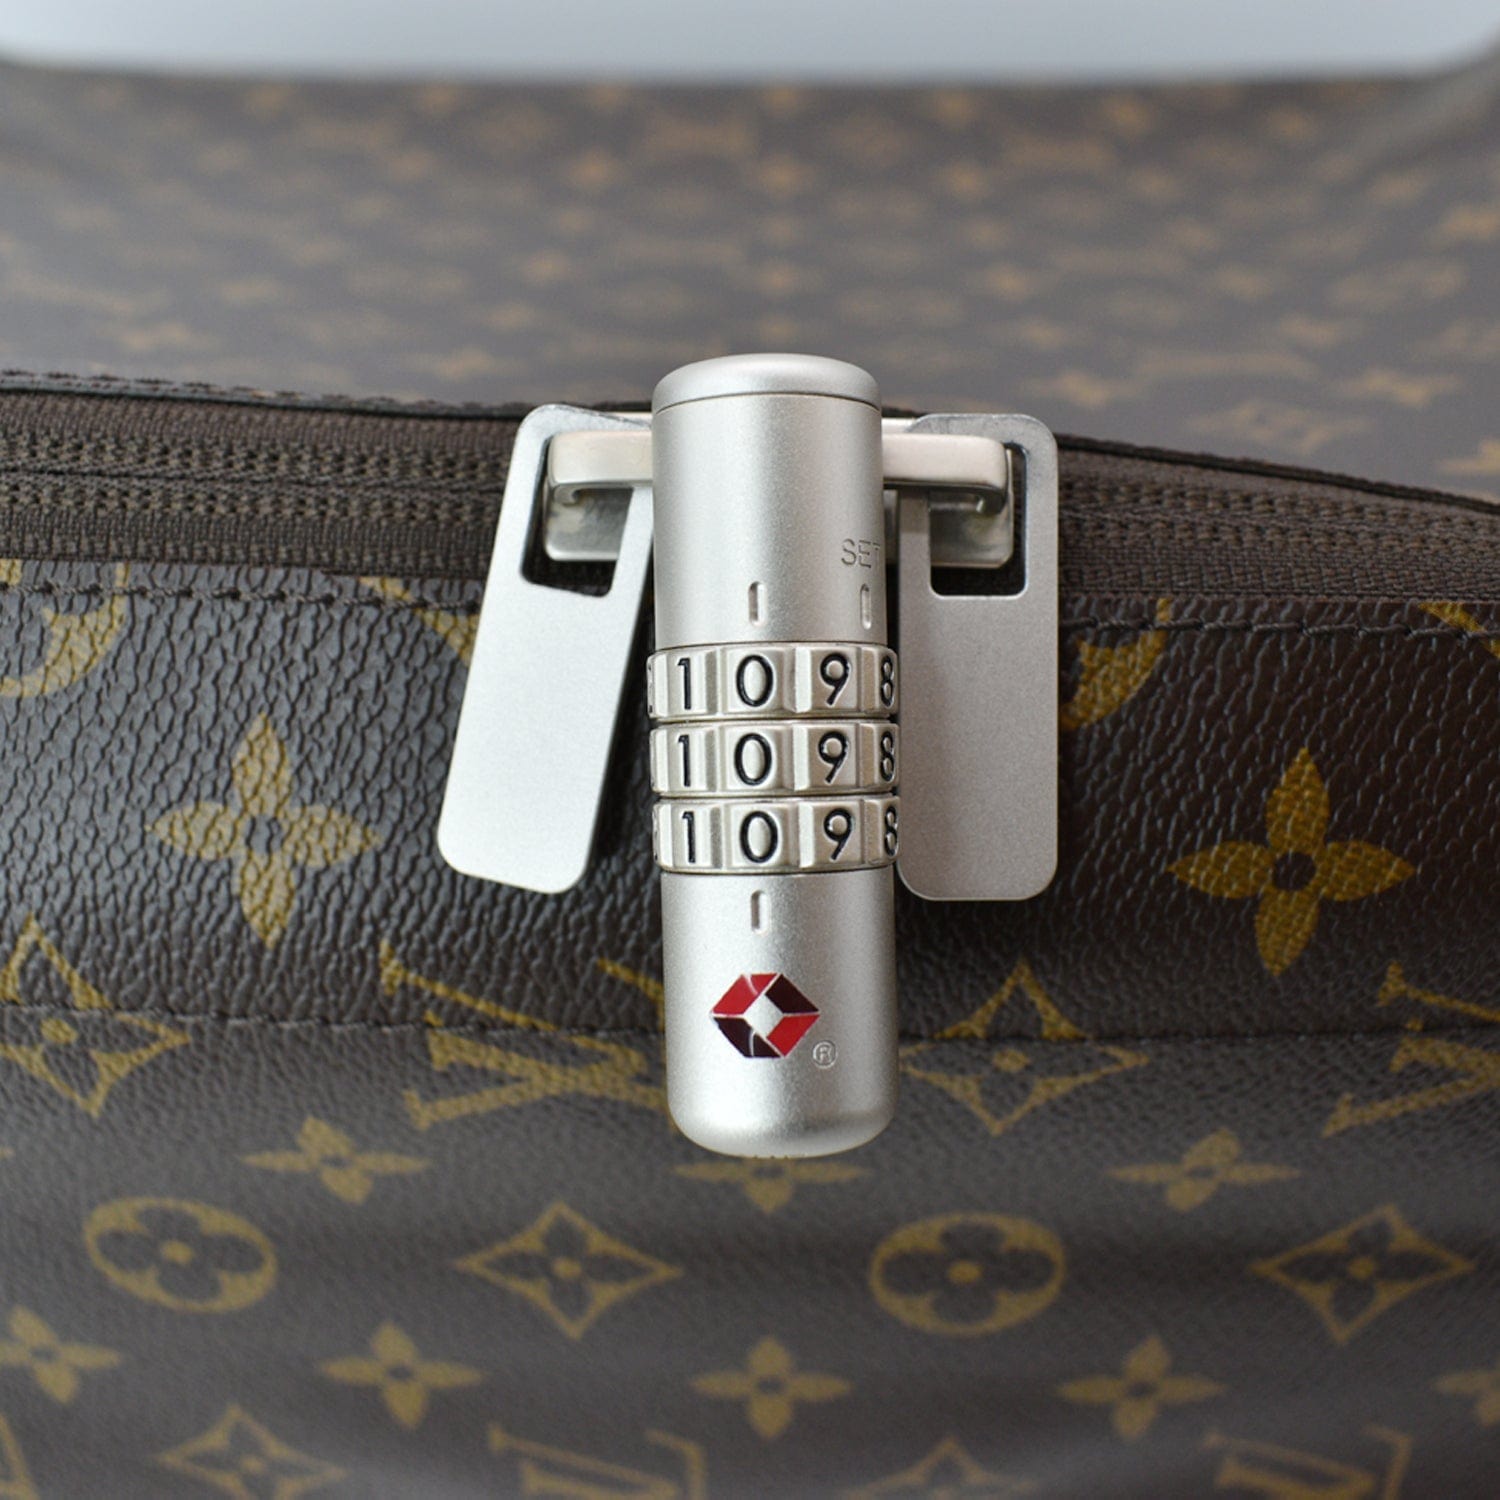 Louis Vuitton Monogram Soft Double Luggage Travel Bag Brown